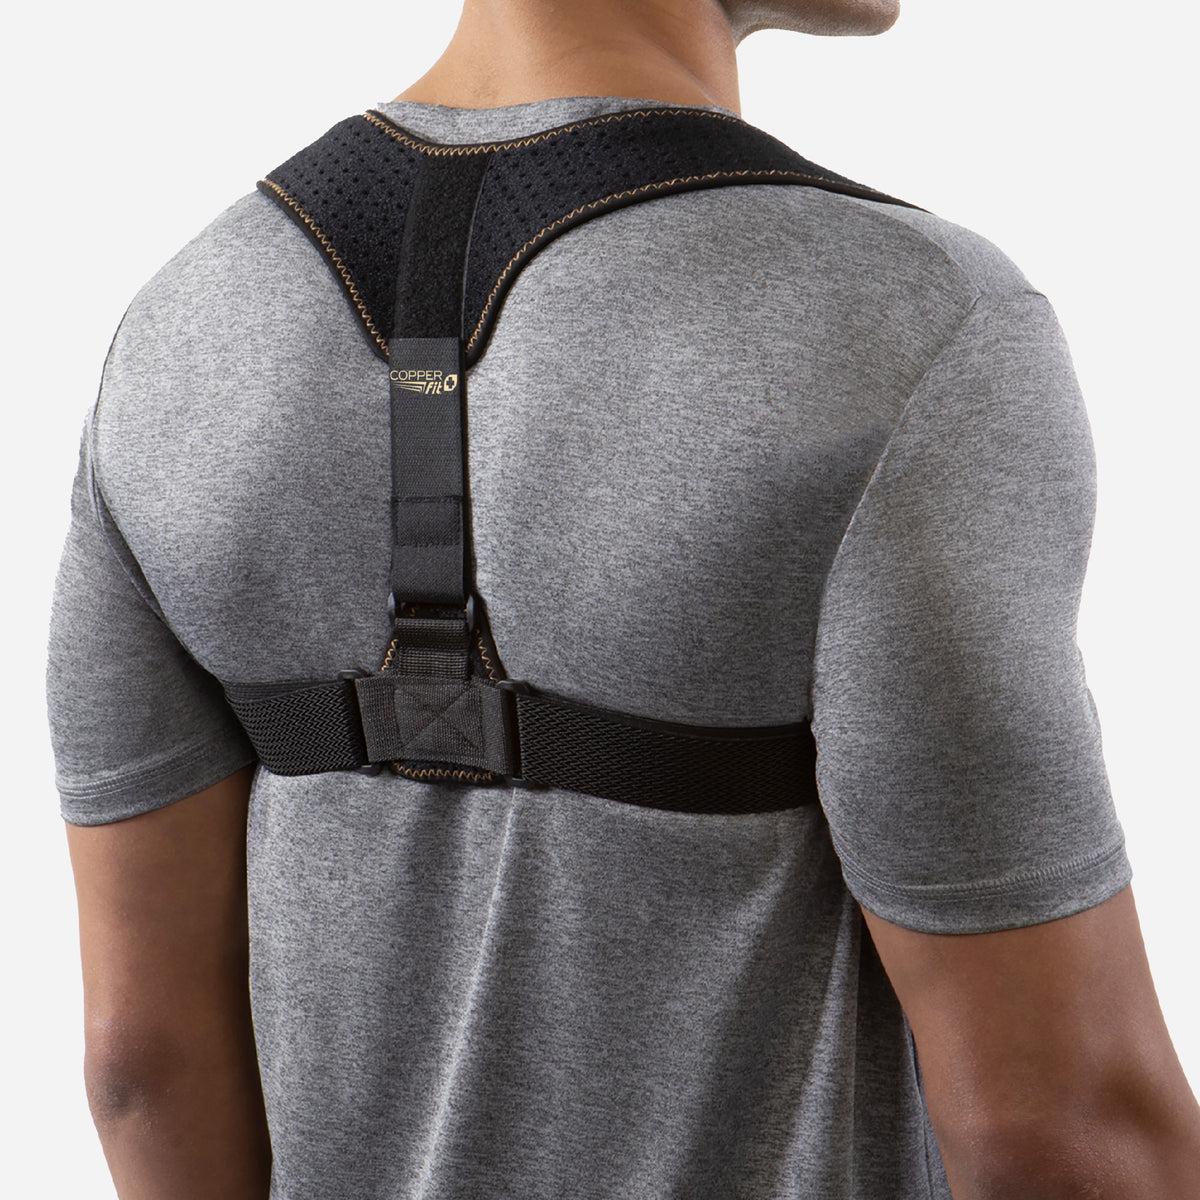 Posture Support for the Neck, Shoulders & Back - Copper Fit